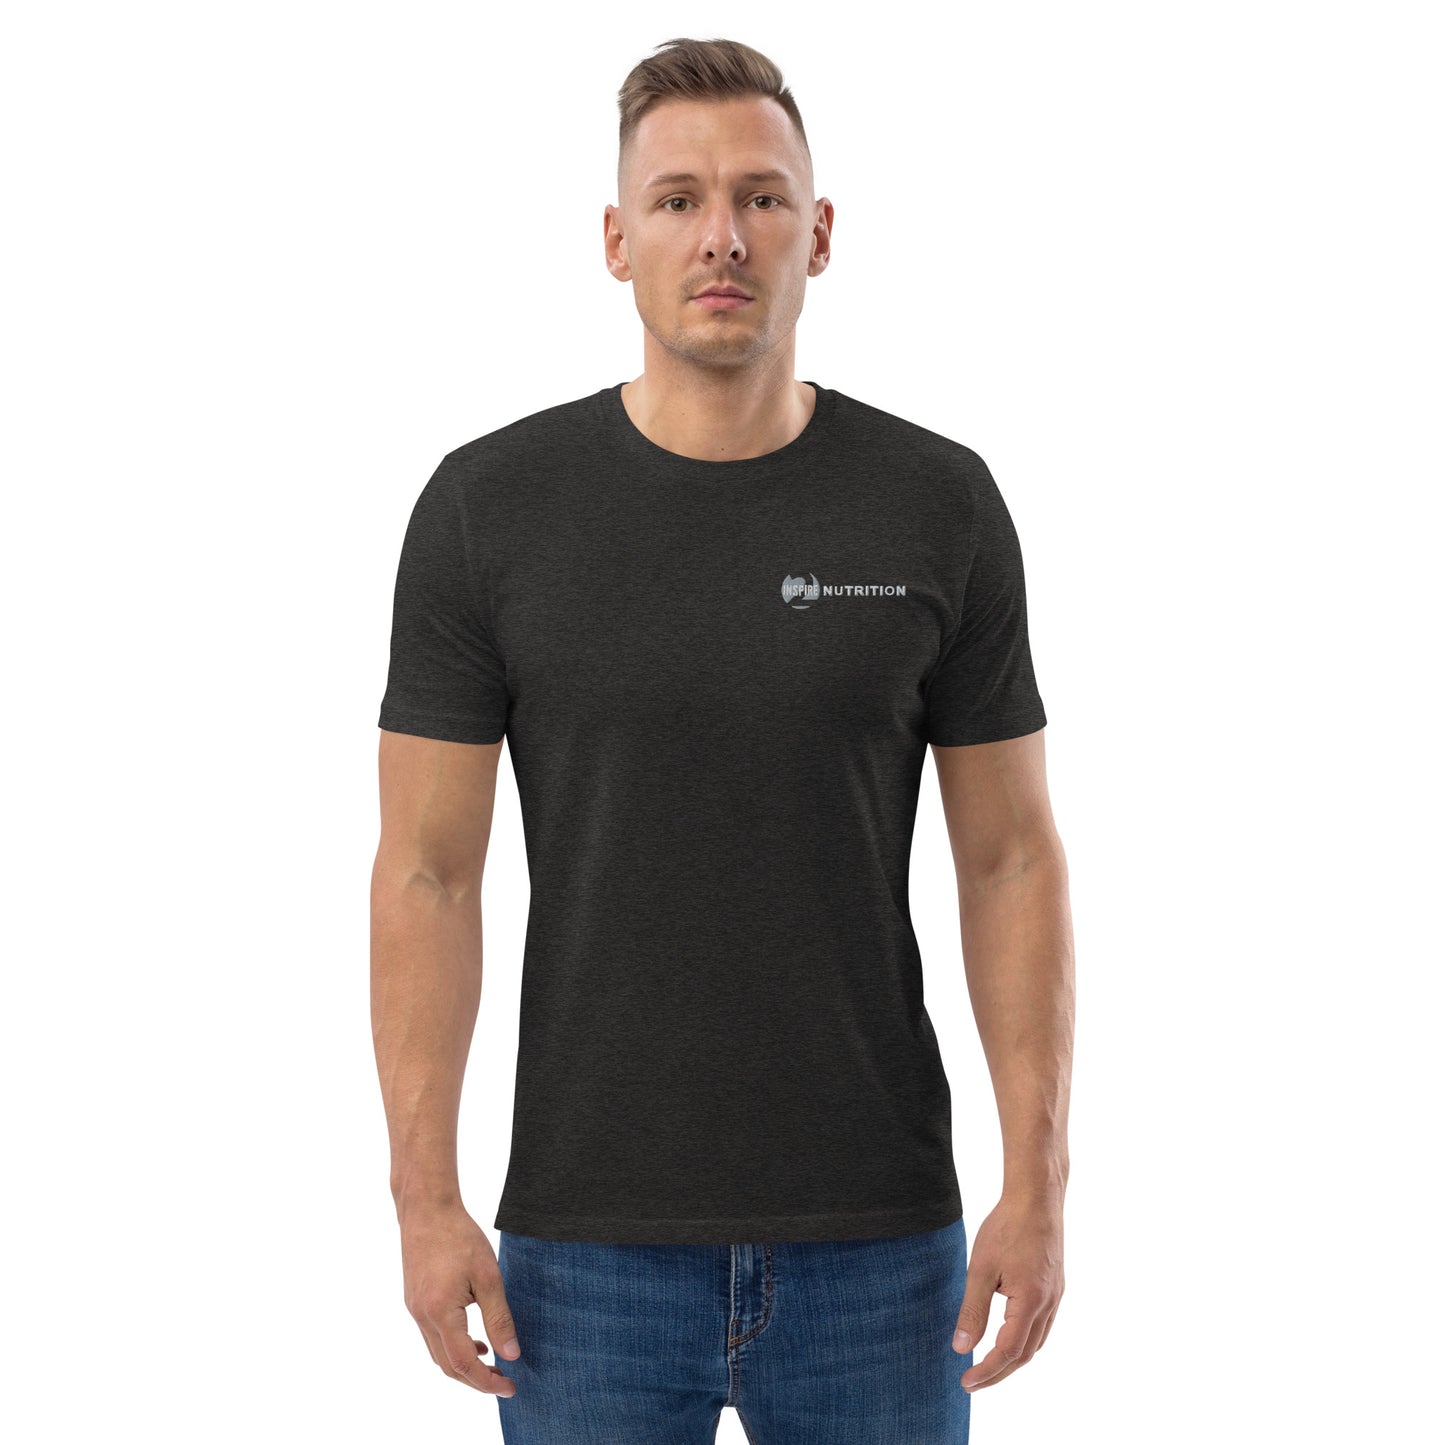 Light Statement Unisex Organic Cotton T-Shirt